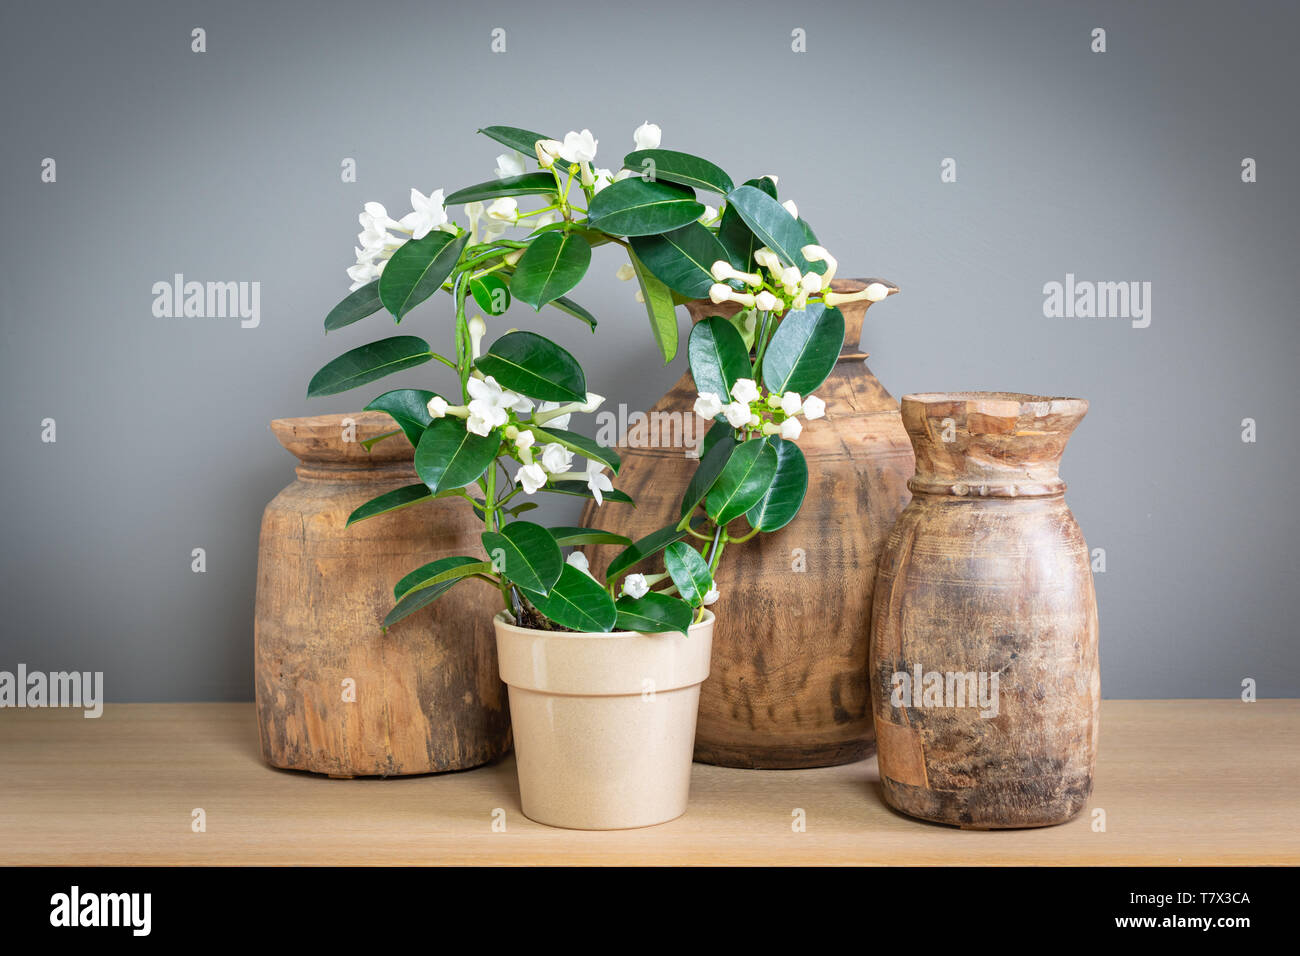 Flowering Stephanotis plant in pot, wooden vases in the backgound. Stock Photo